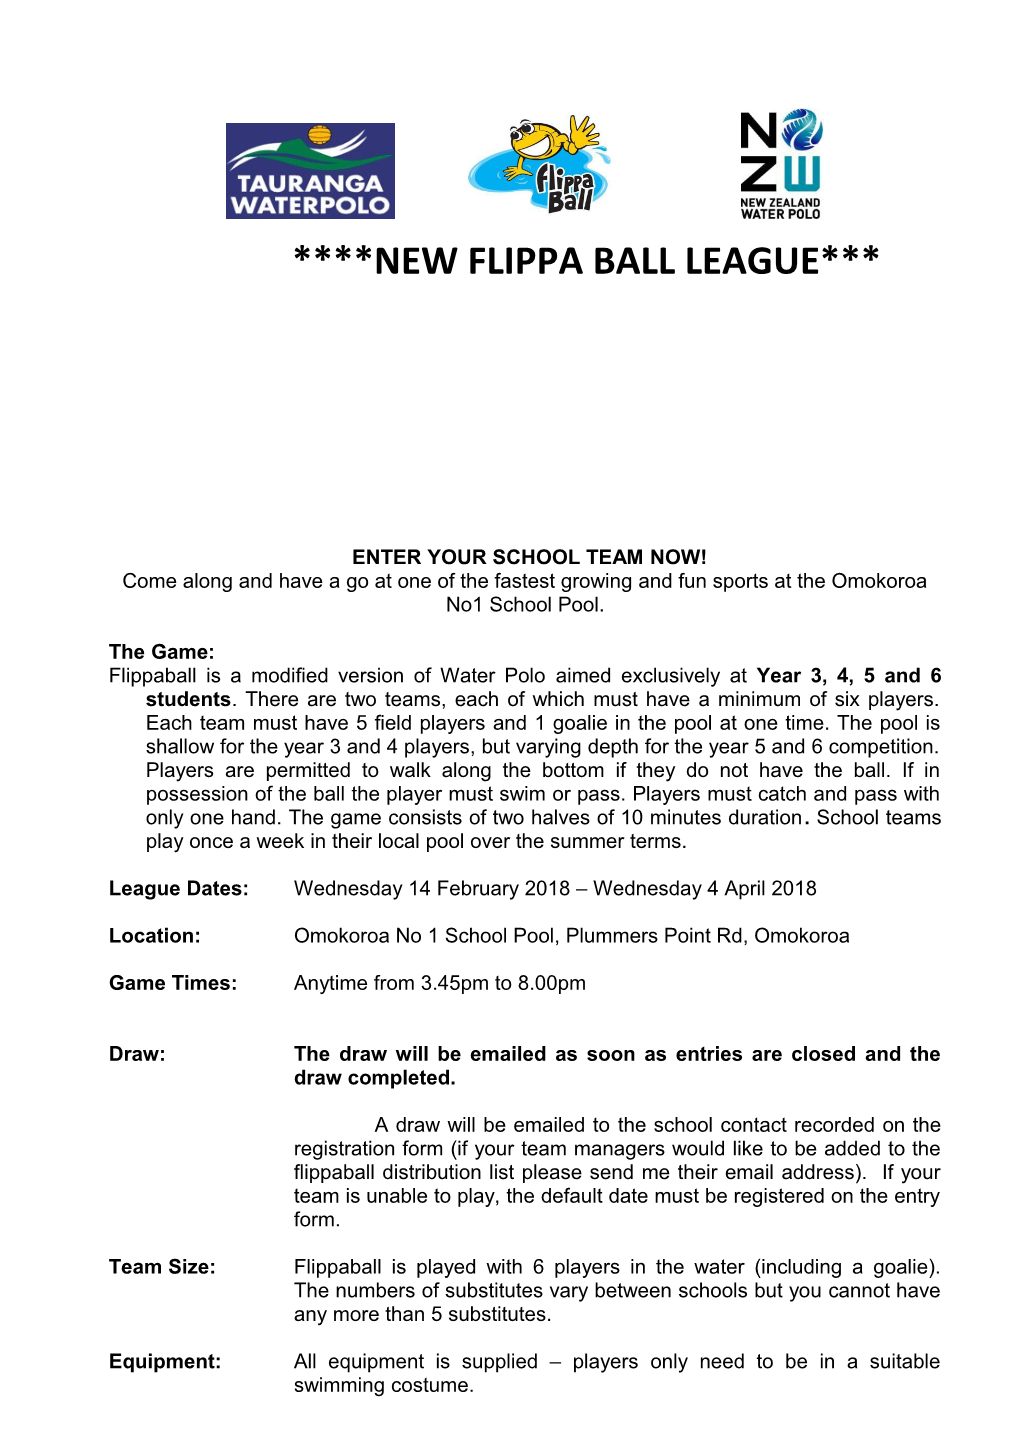 New Flippa Ball League